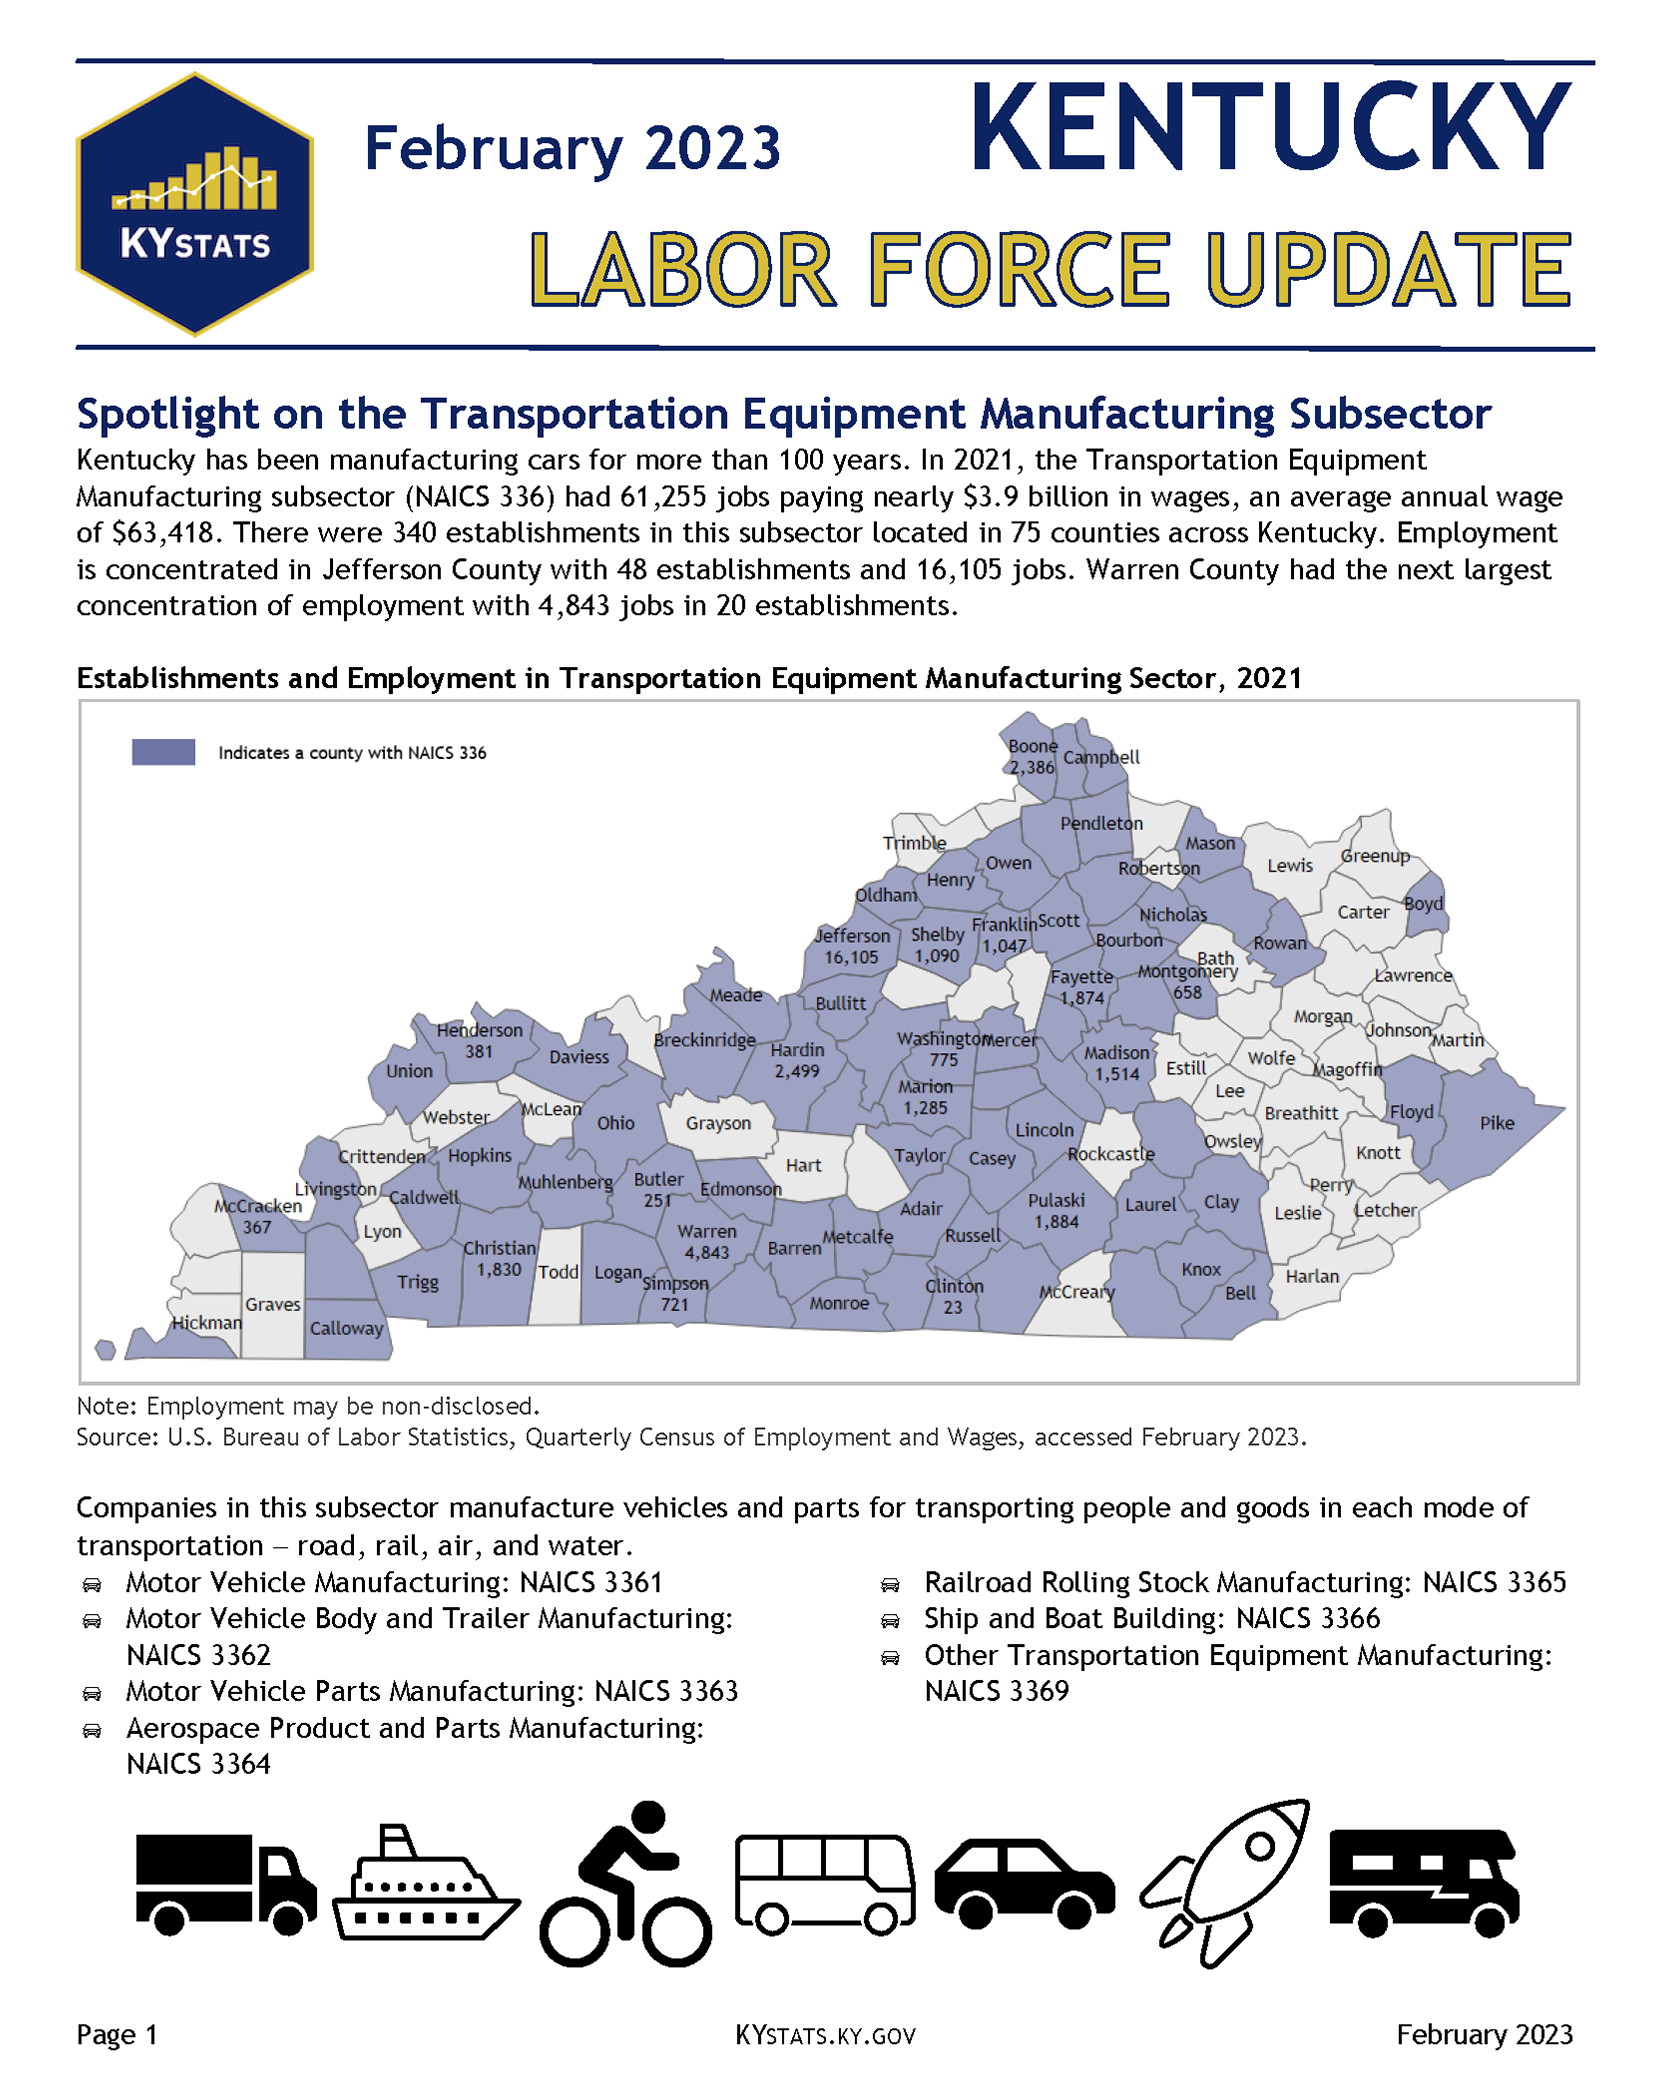 June 2022 Labor Force Update Image